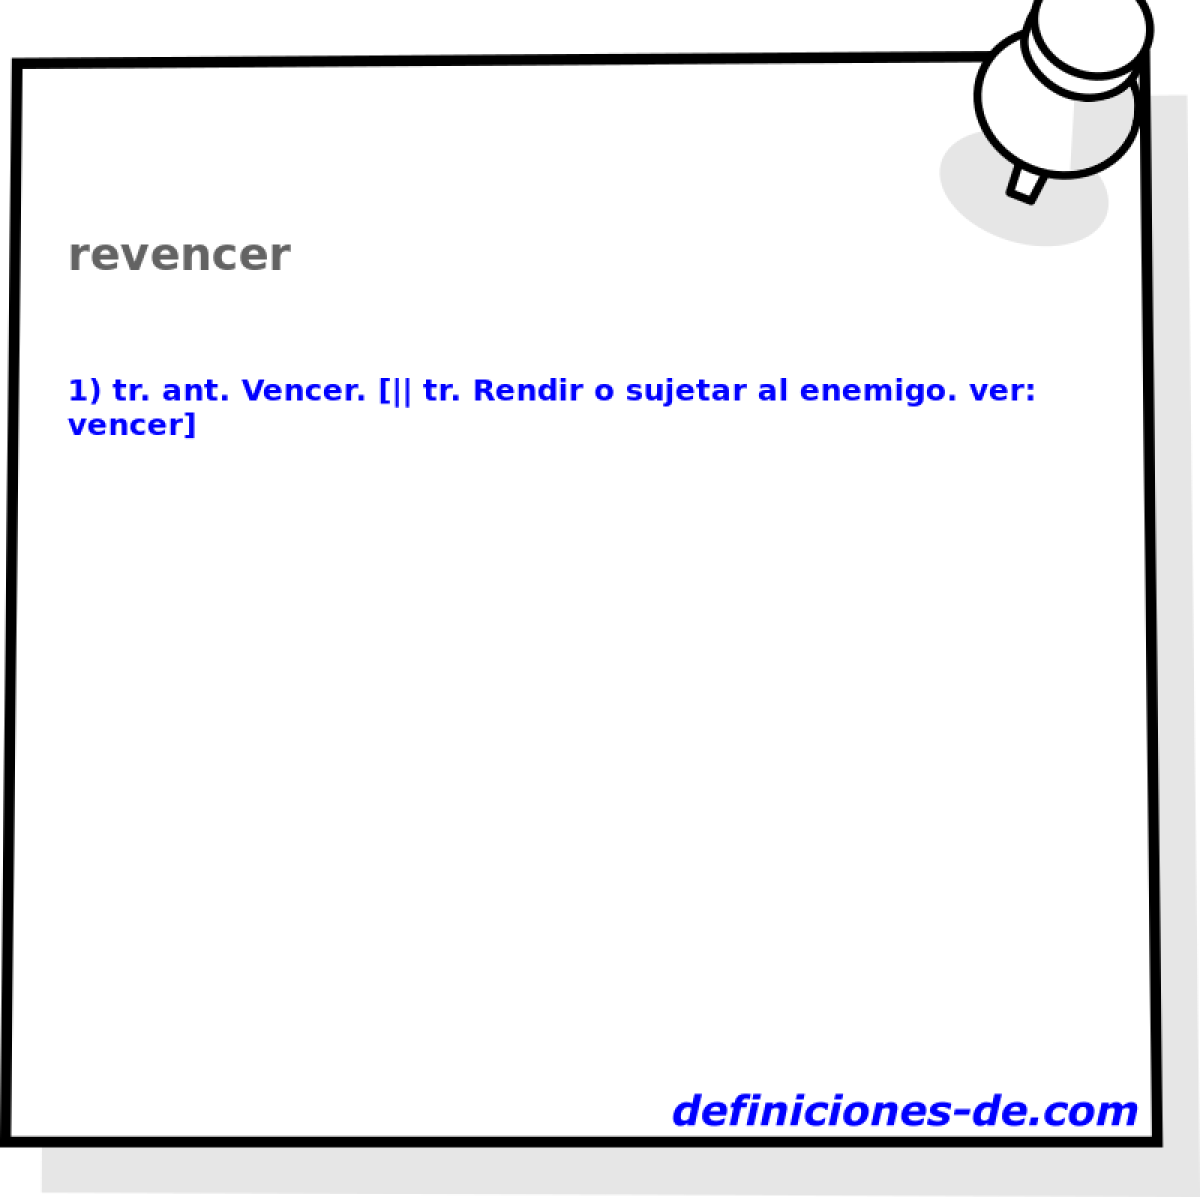 revencer 